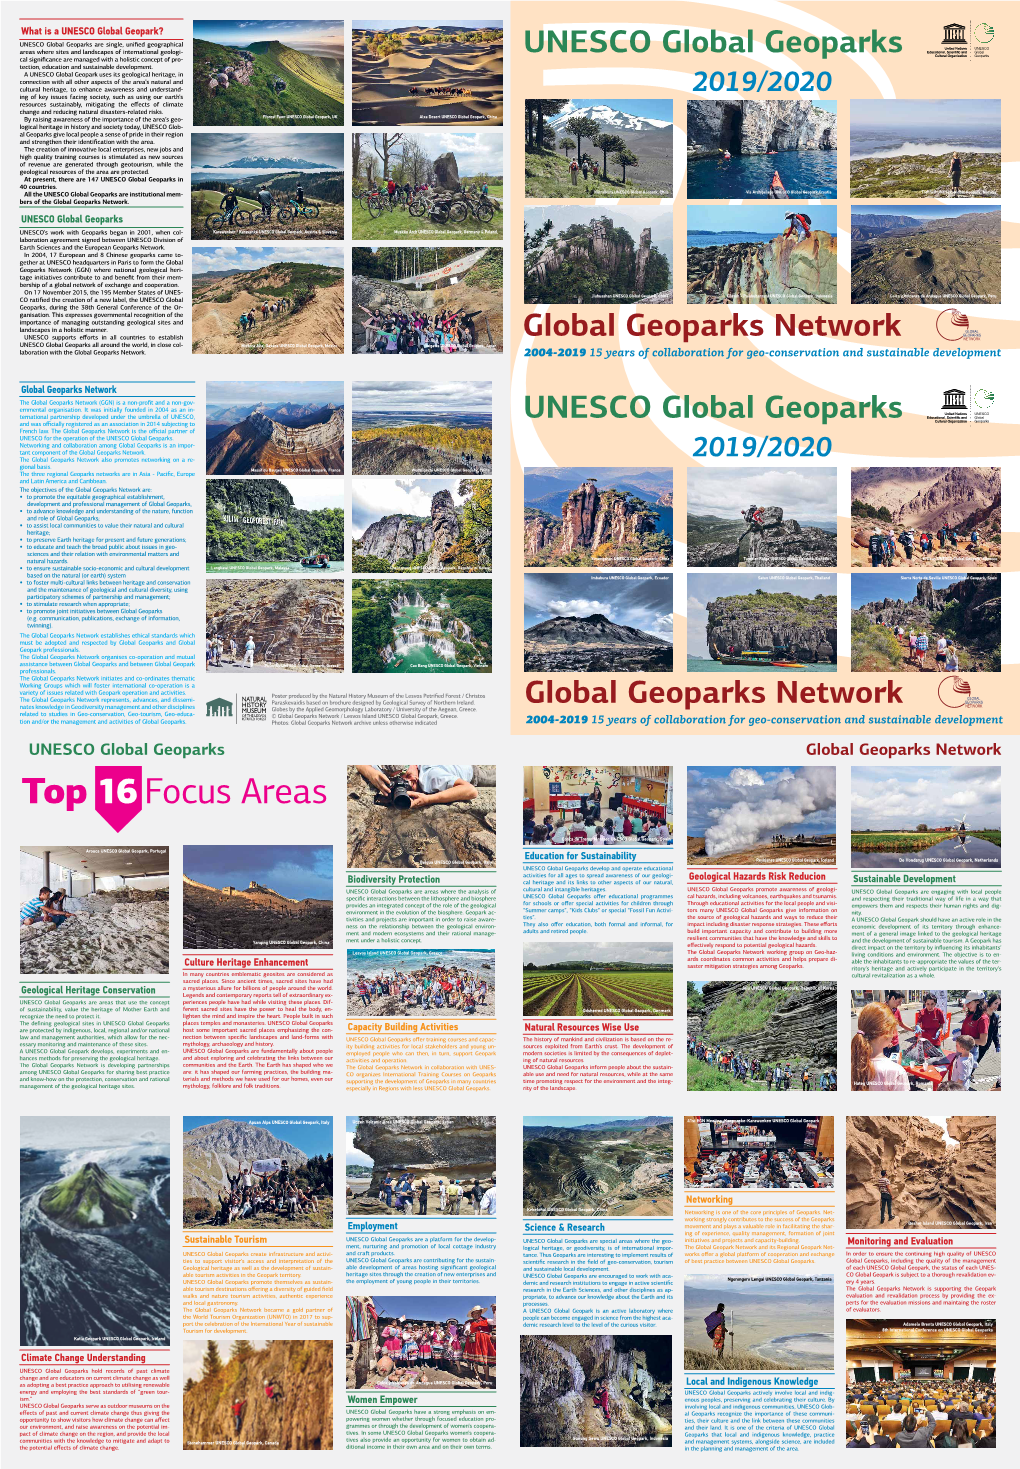 UNESCO Global Geoparks UNESCO Global Geoparks Celebrating Earth Heritage - Sustaining Local Communities